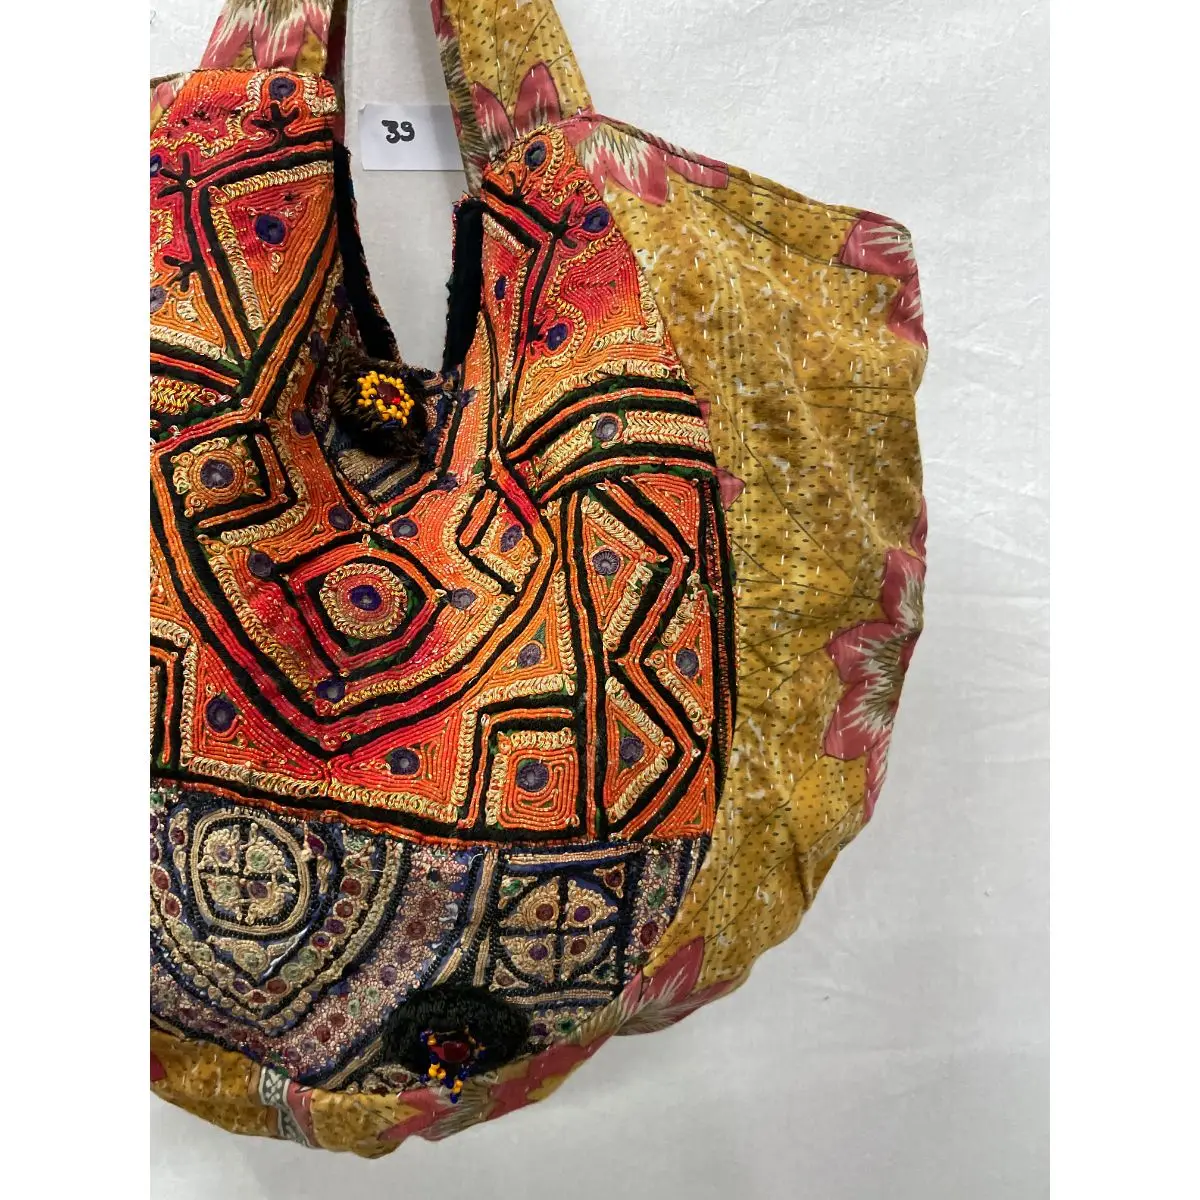 HUGE Ethnic Banjara Bag Old Recycled Traditional Indian Handmade Beaded Work